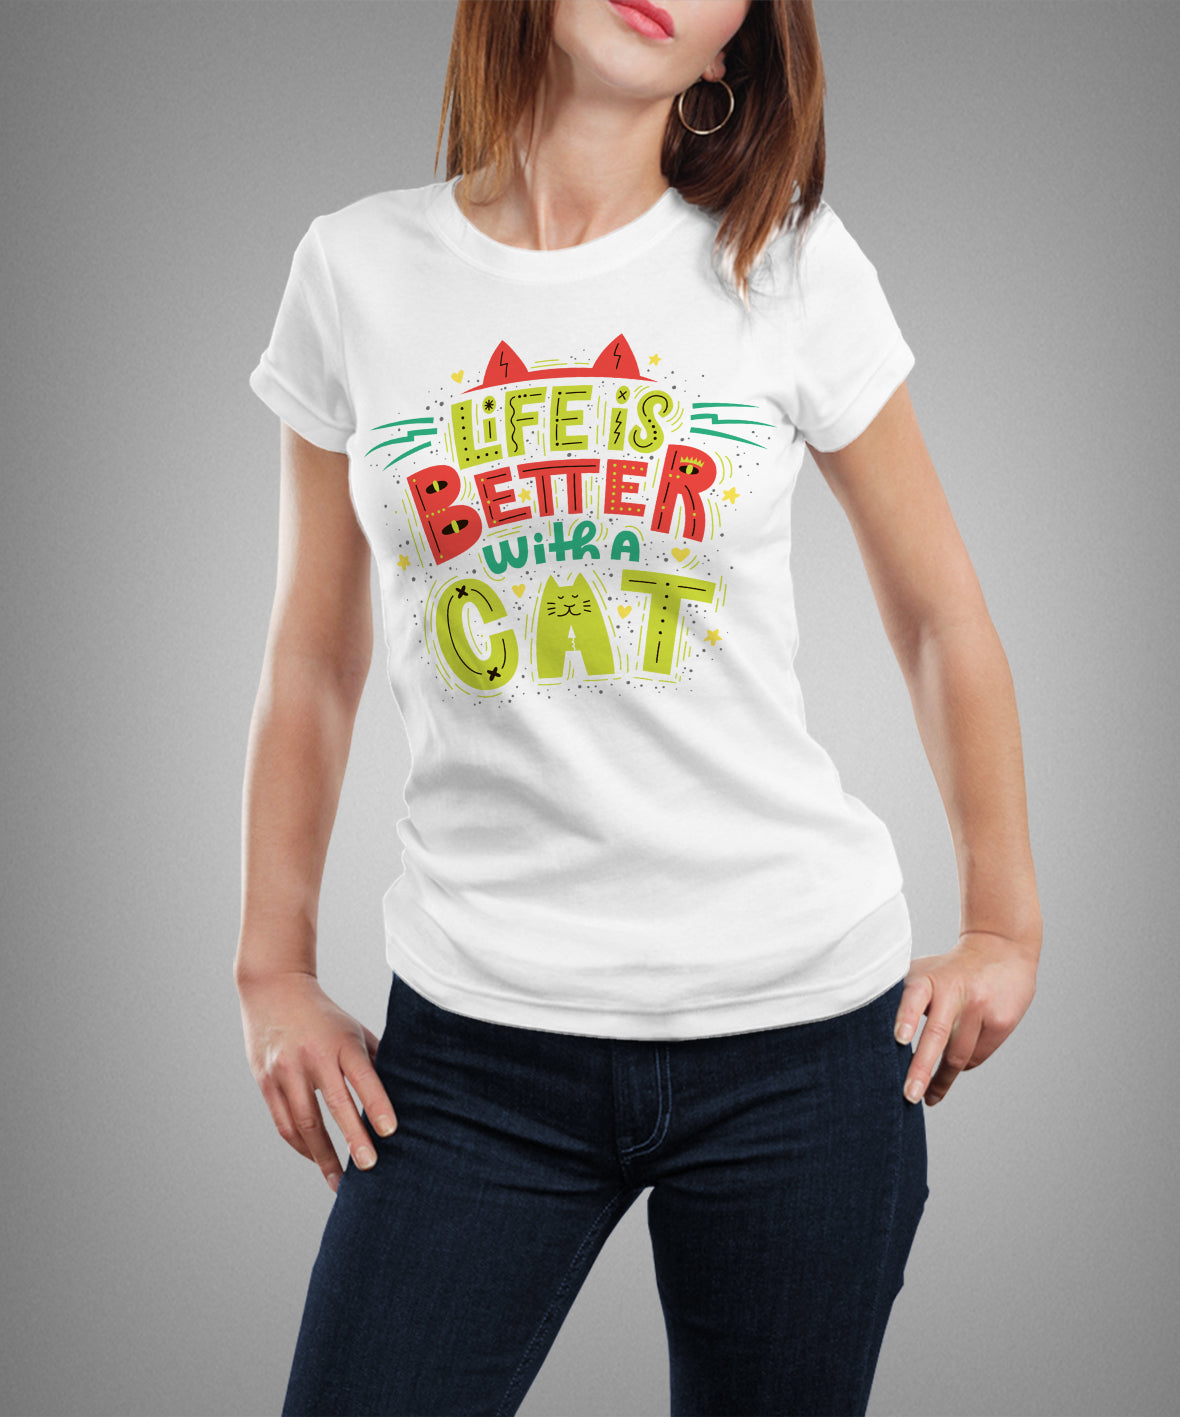 T-shirts "Love my cat"